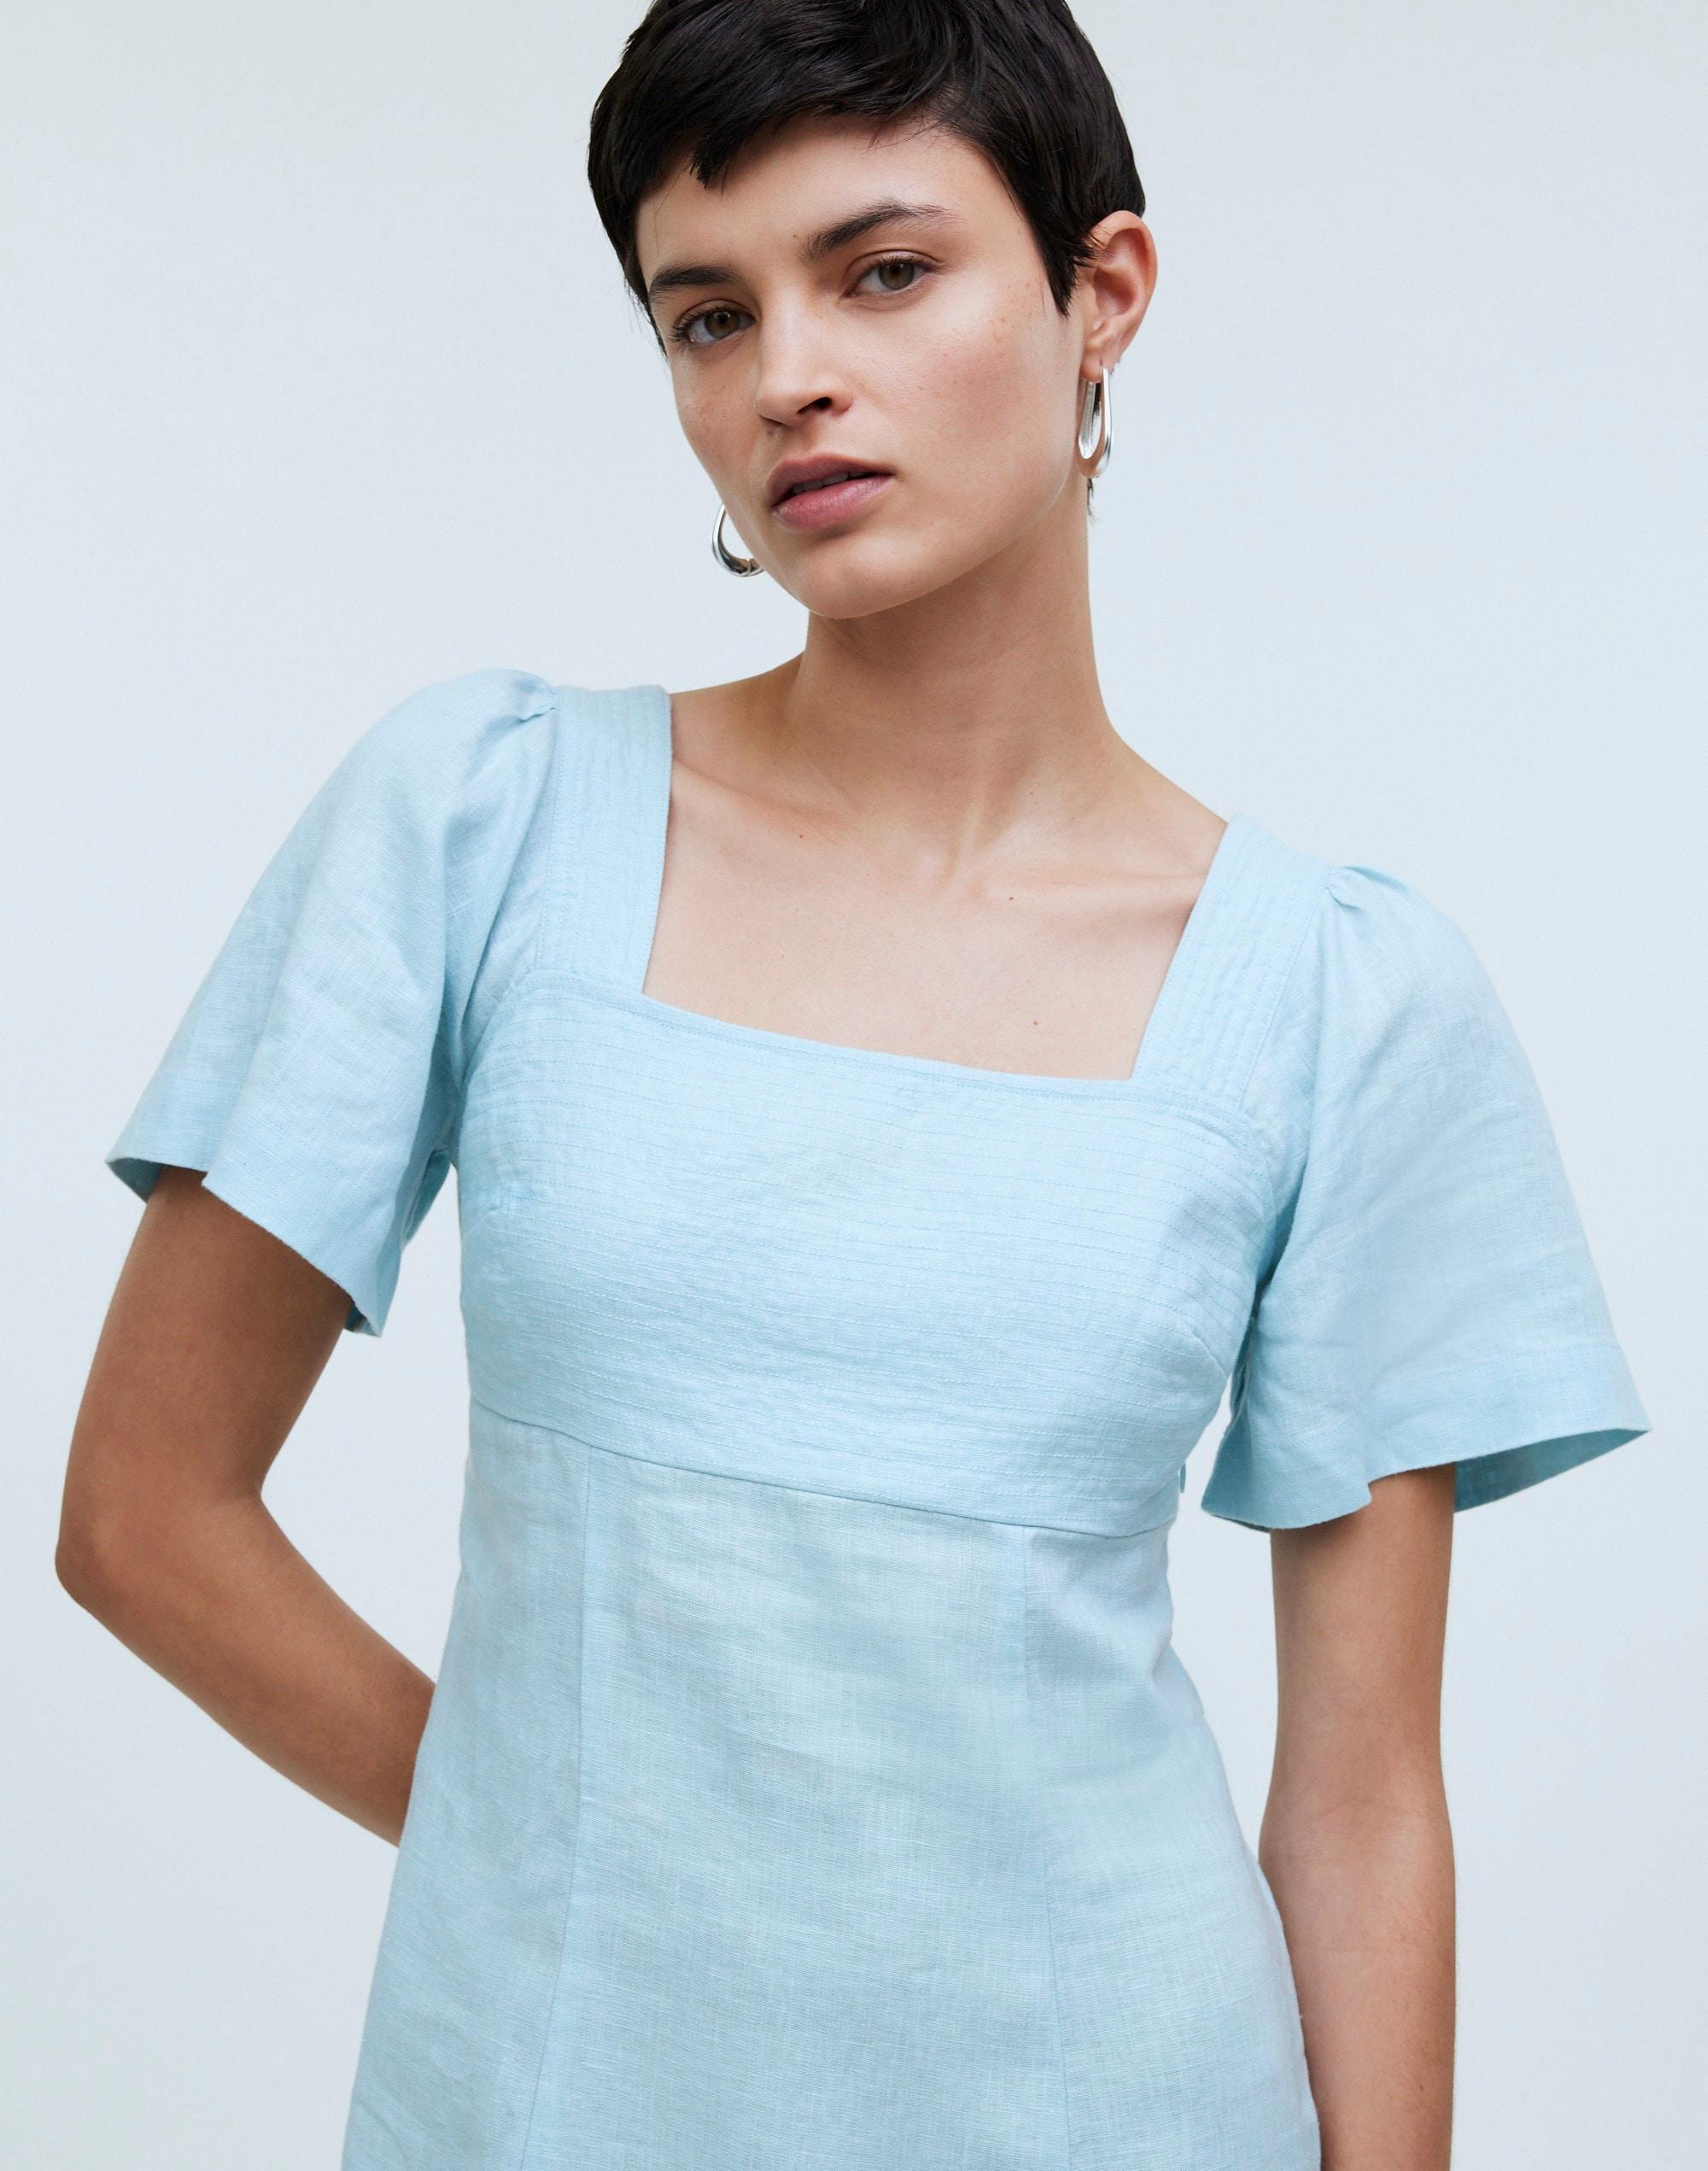 Square-Neck Mini Dress in 100% Linen Product Image